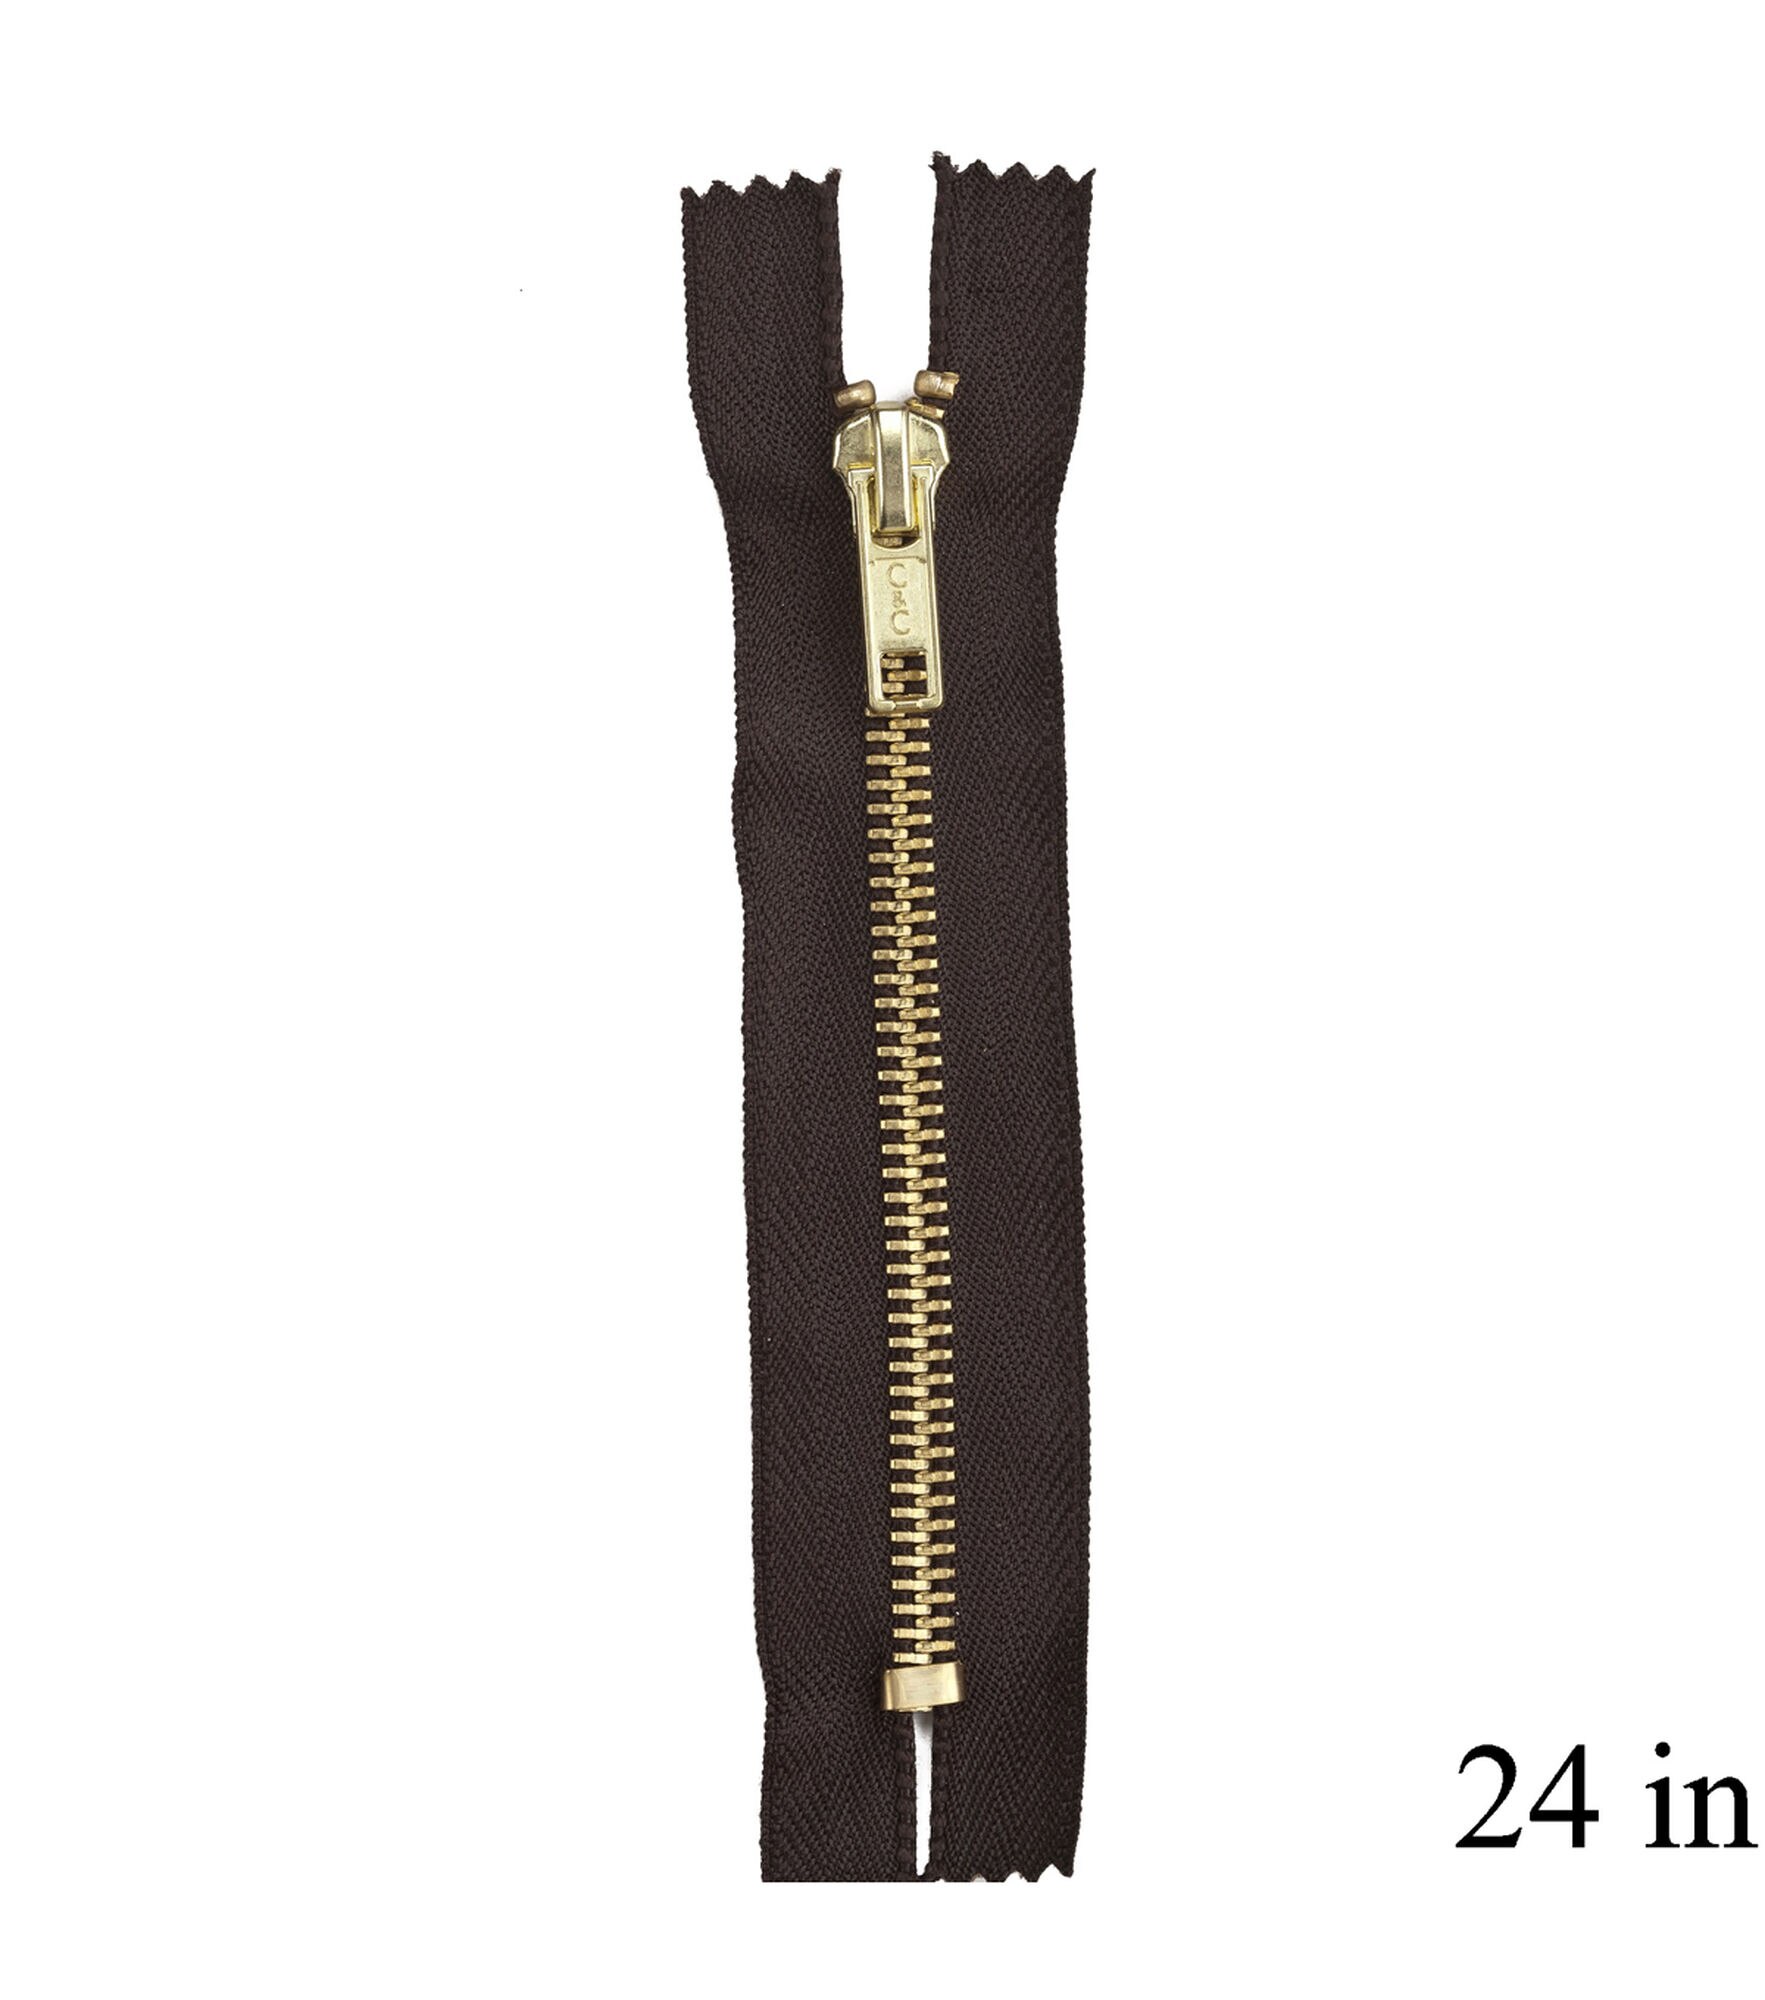 Coats & Clark Fashion Brass Separating Zipper 24